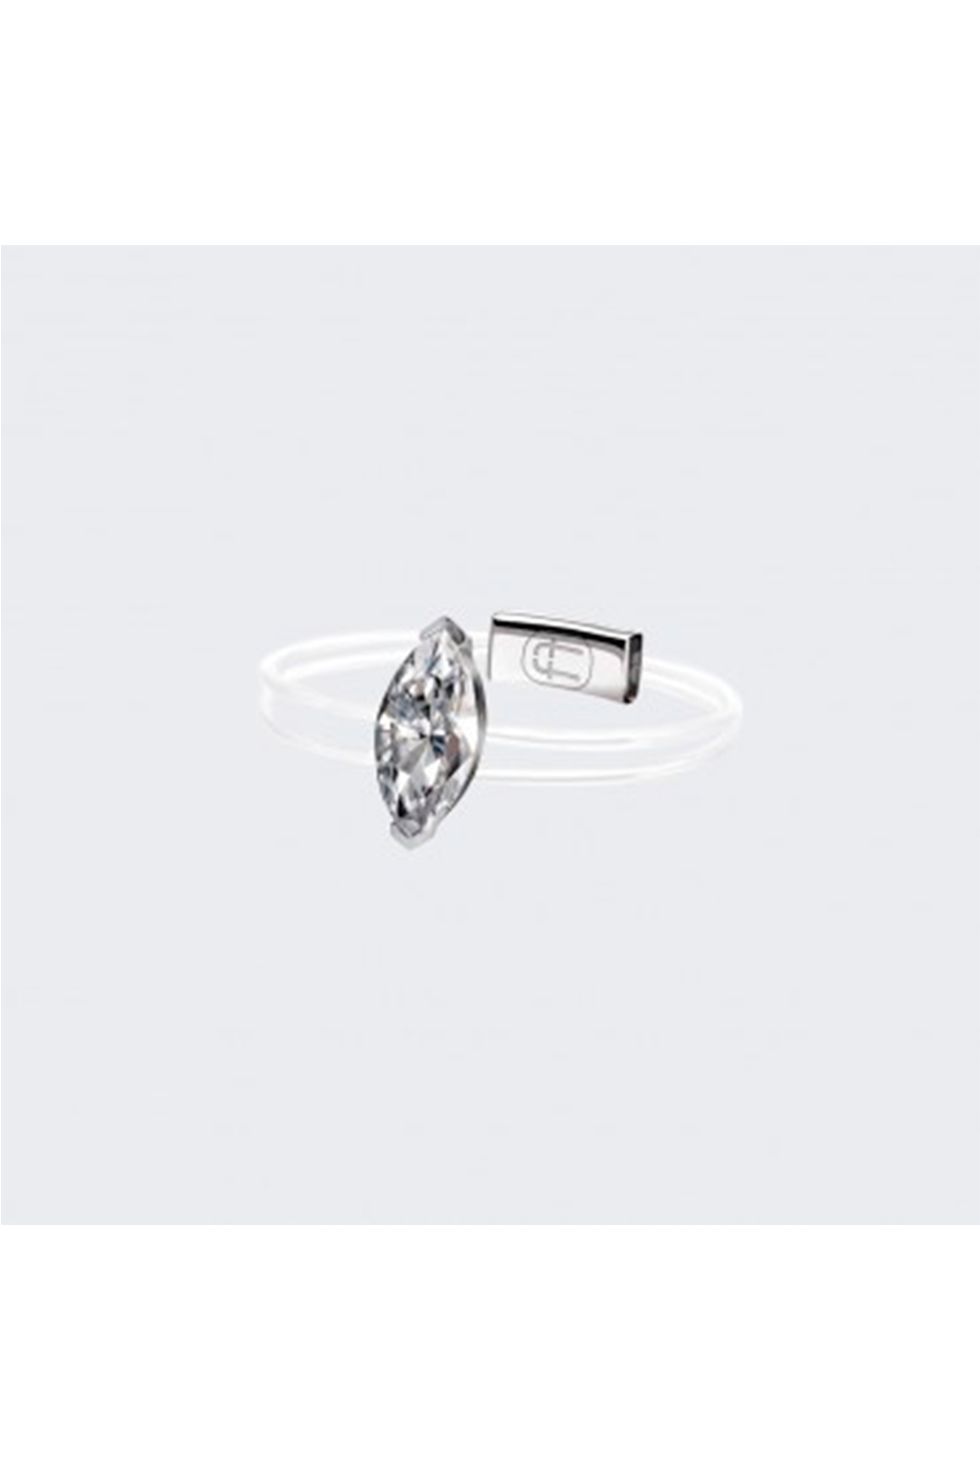 Jewellery, Ring, Engagement ring, Body jewelry, Pre-engagement ring, Diamond, Mineral, Metal, Platinum, Gemstone, 